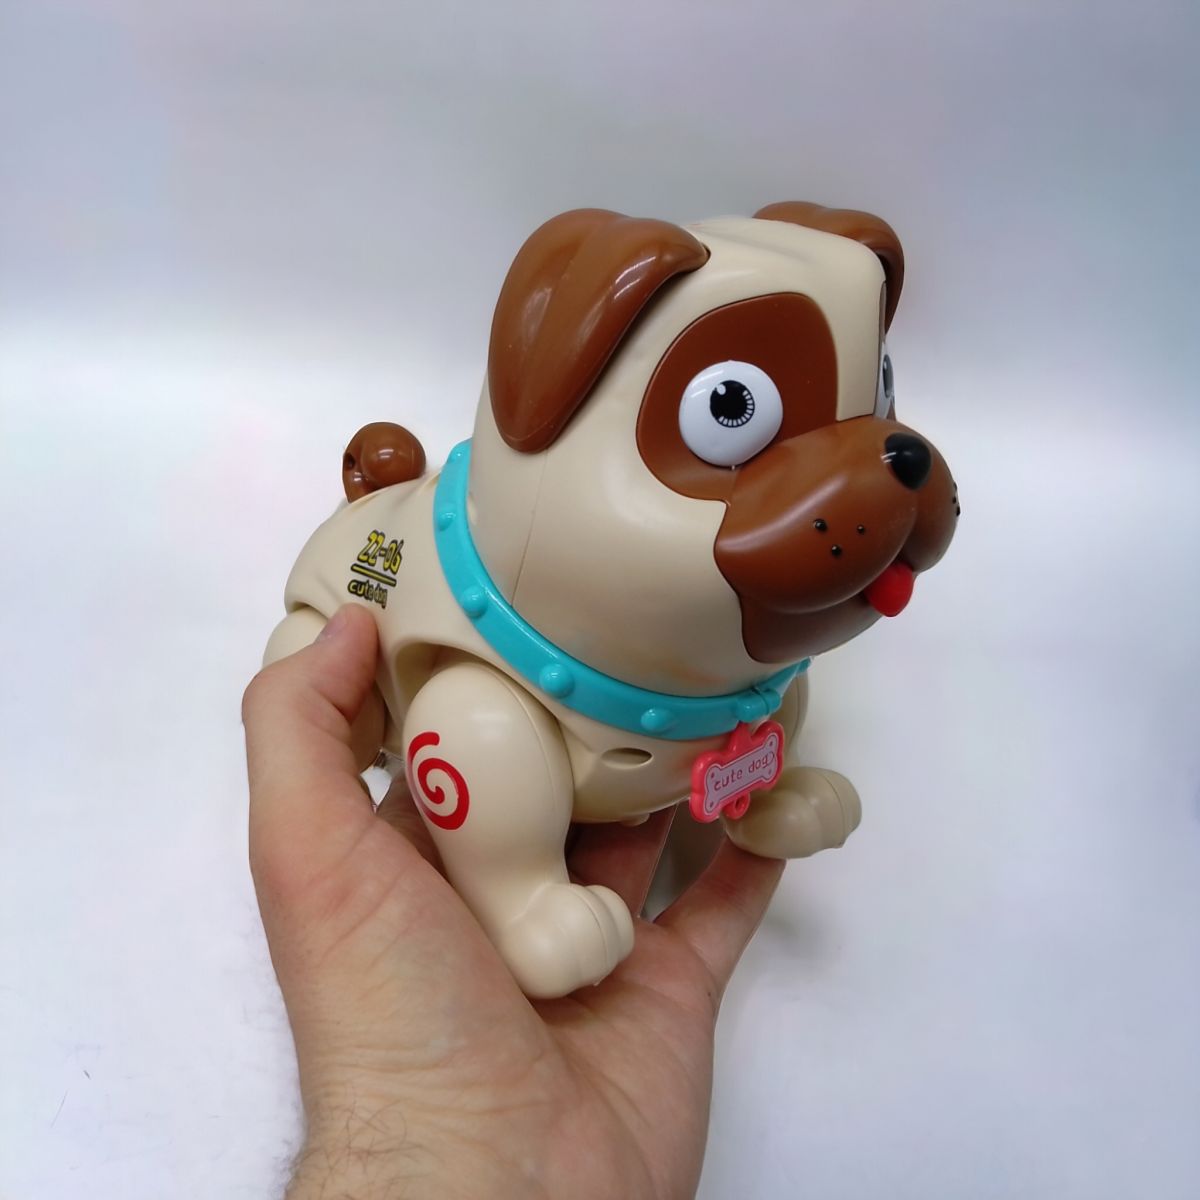 Іграшка інтерактивна "Cute Pugs: Собака", музична (коричнева)